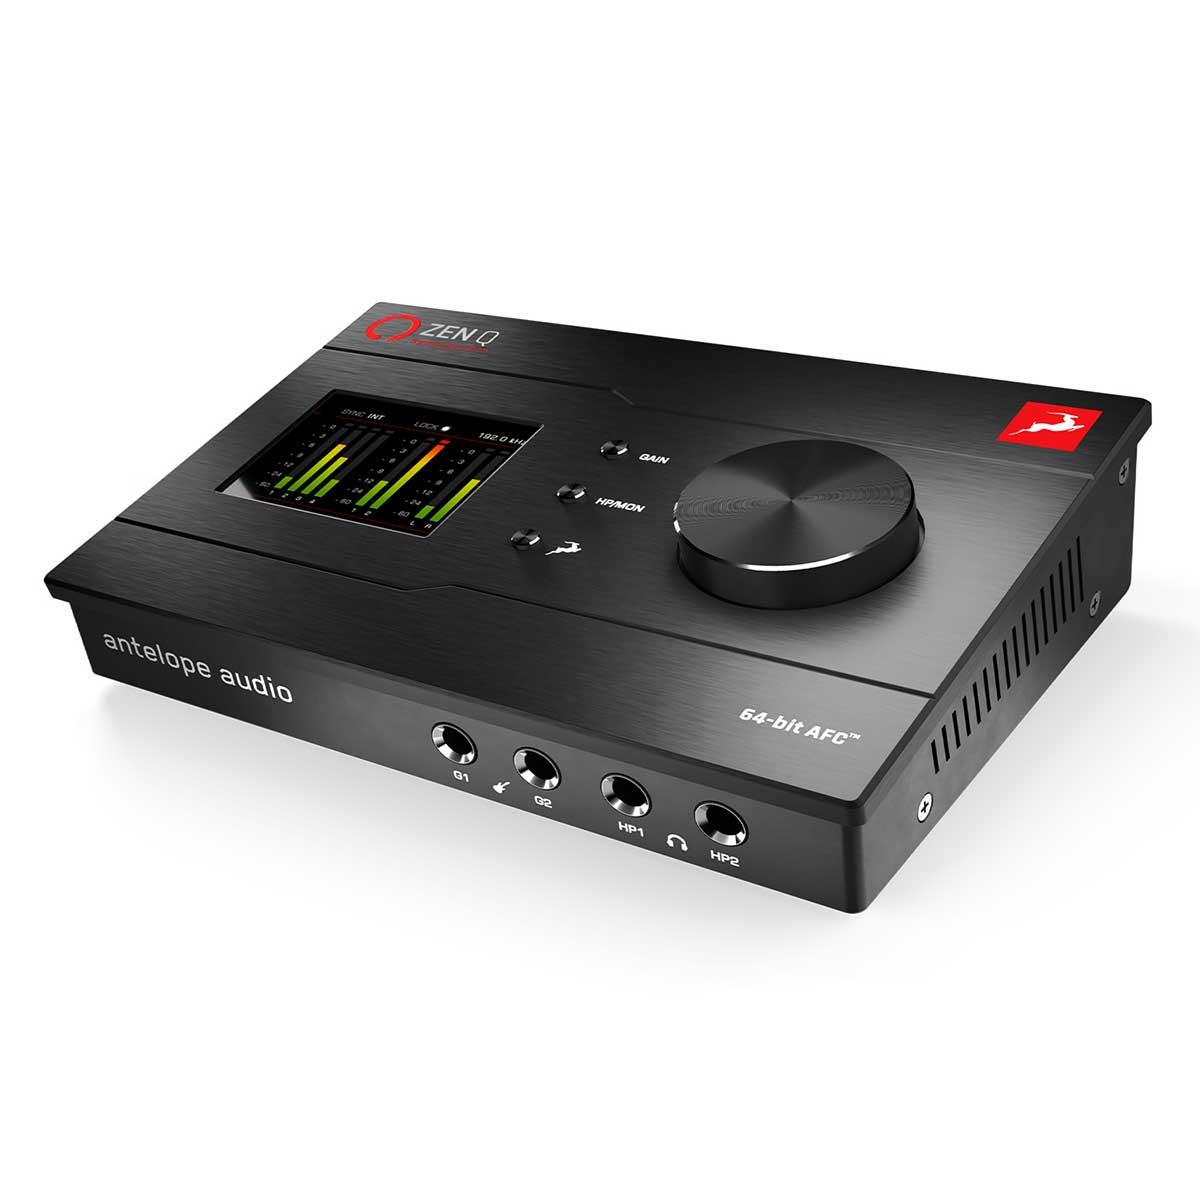 Antelope Audio Zen Q Synergy Core 14x10 Thunderbolt 3 Audio interface with FREE Bonus Softcase - Koala Audio